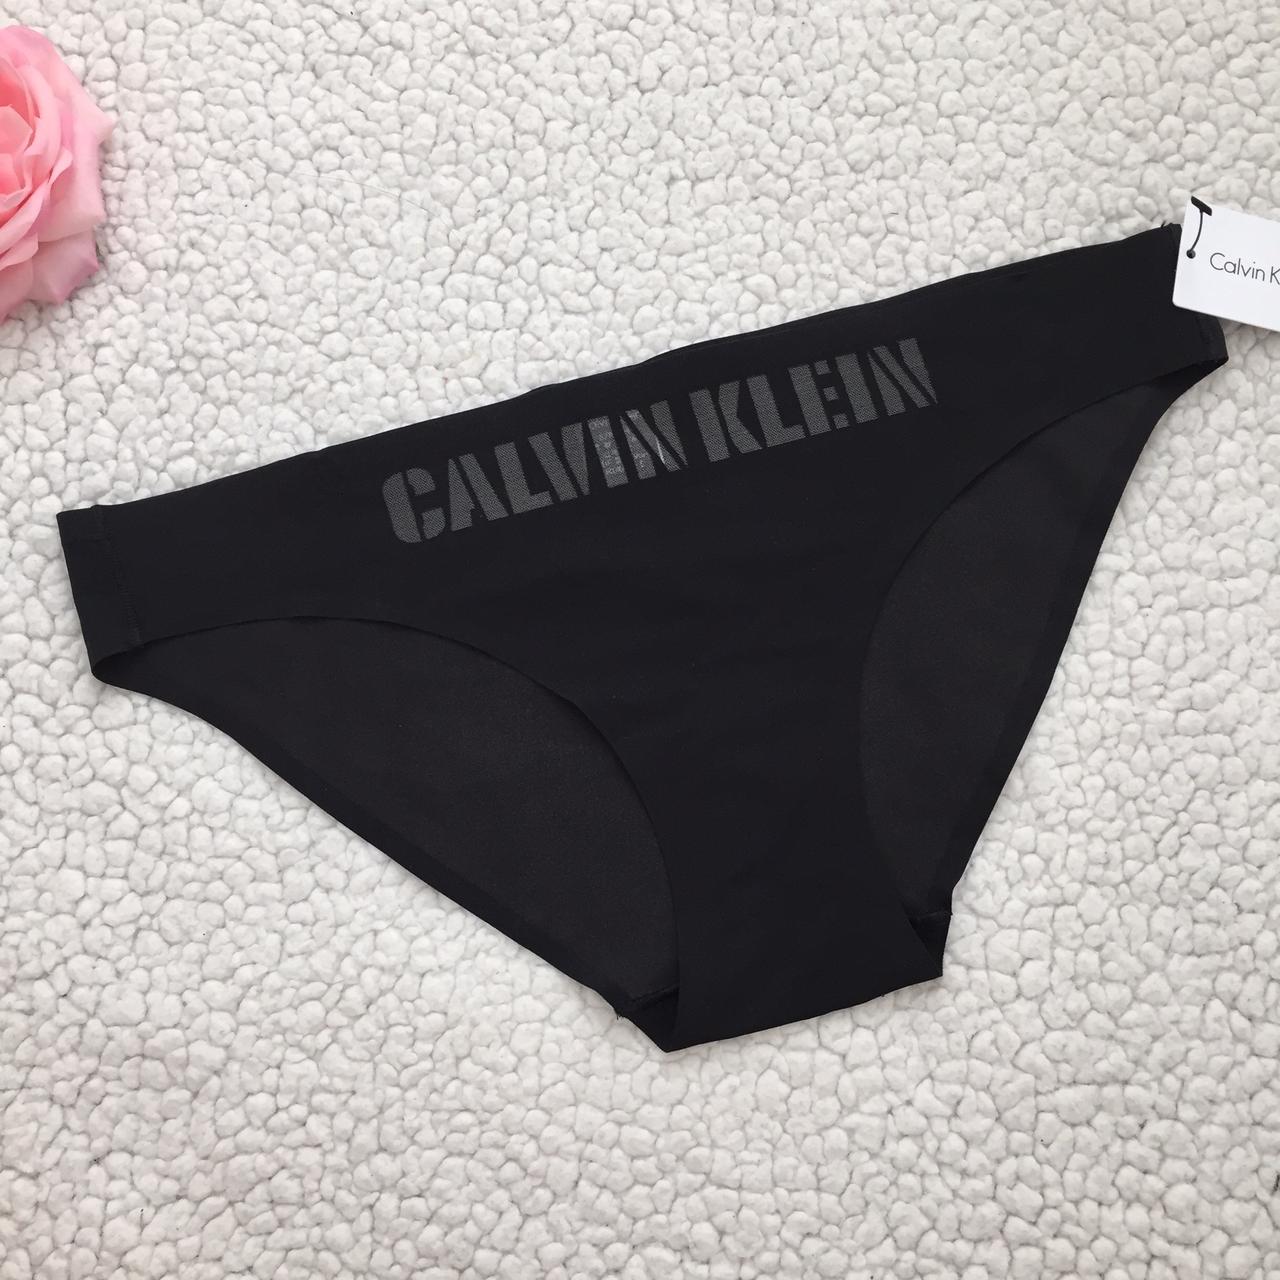 Panties Calvin Klein Bikini Panties Black